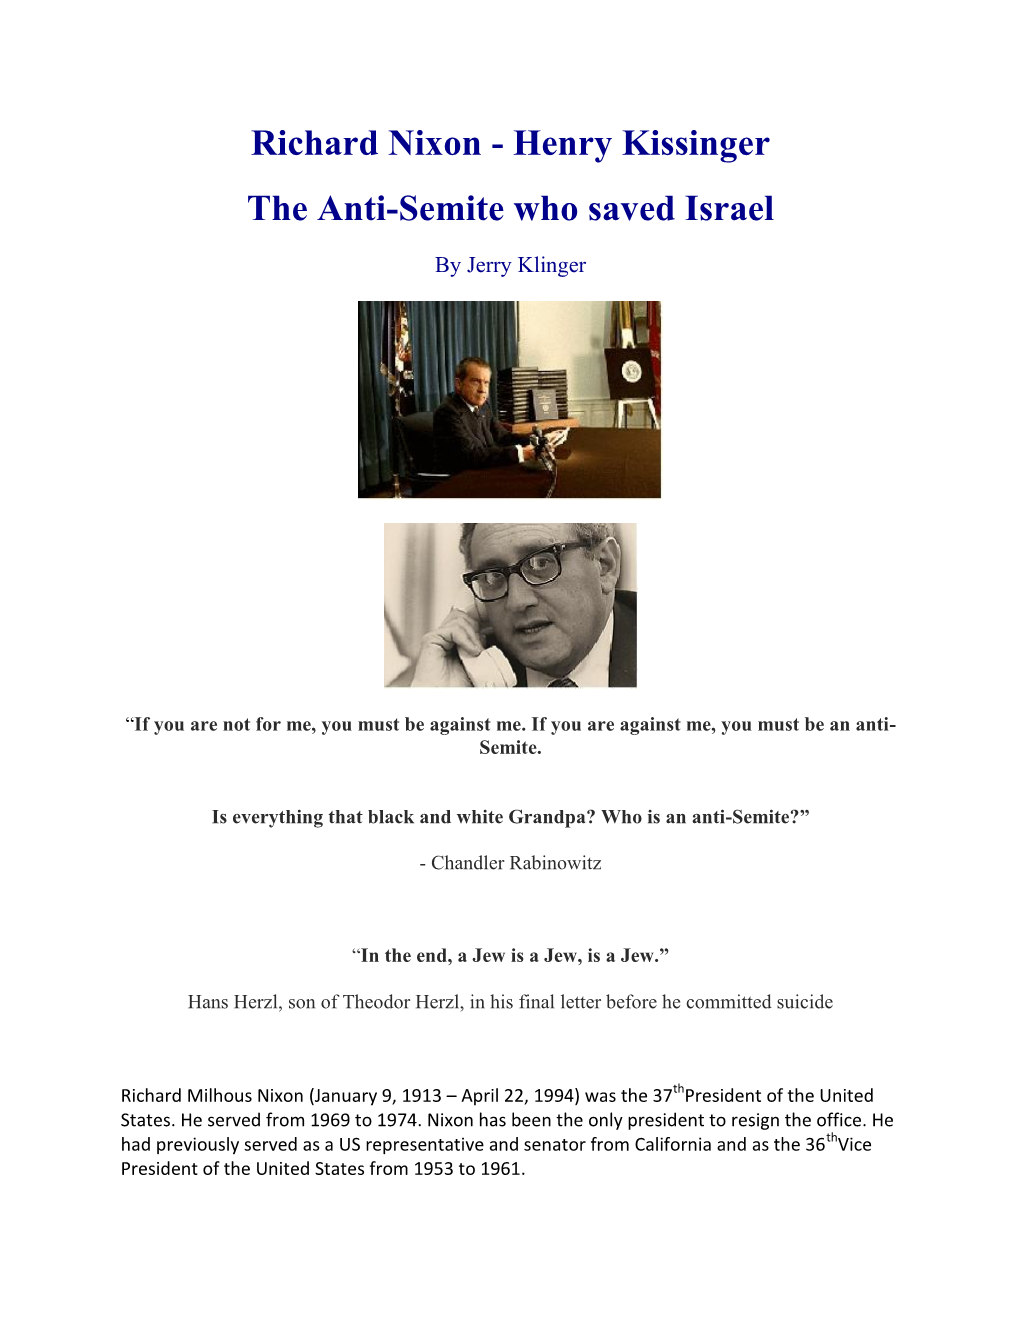 Richard Nixon - Henry Kissinger the Anti-Semite Who Saved Israel